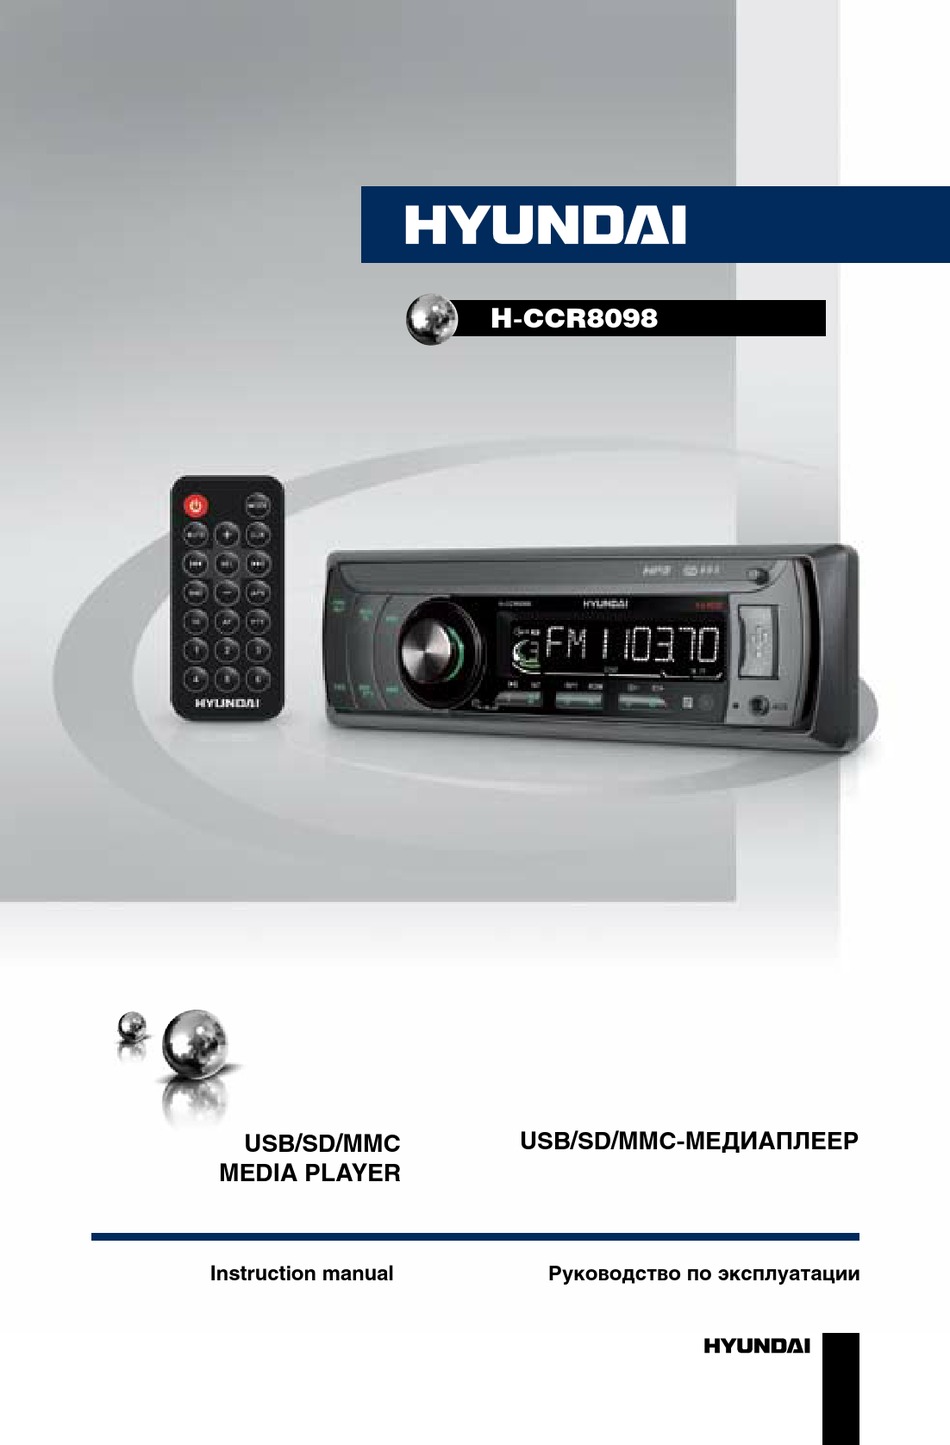 HYUNDAI H-CCR8098 INSTRUCTION MANUAL Pdf Download | ManualsLib